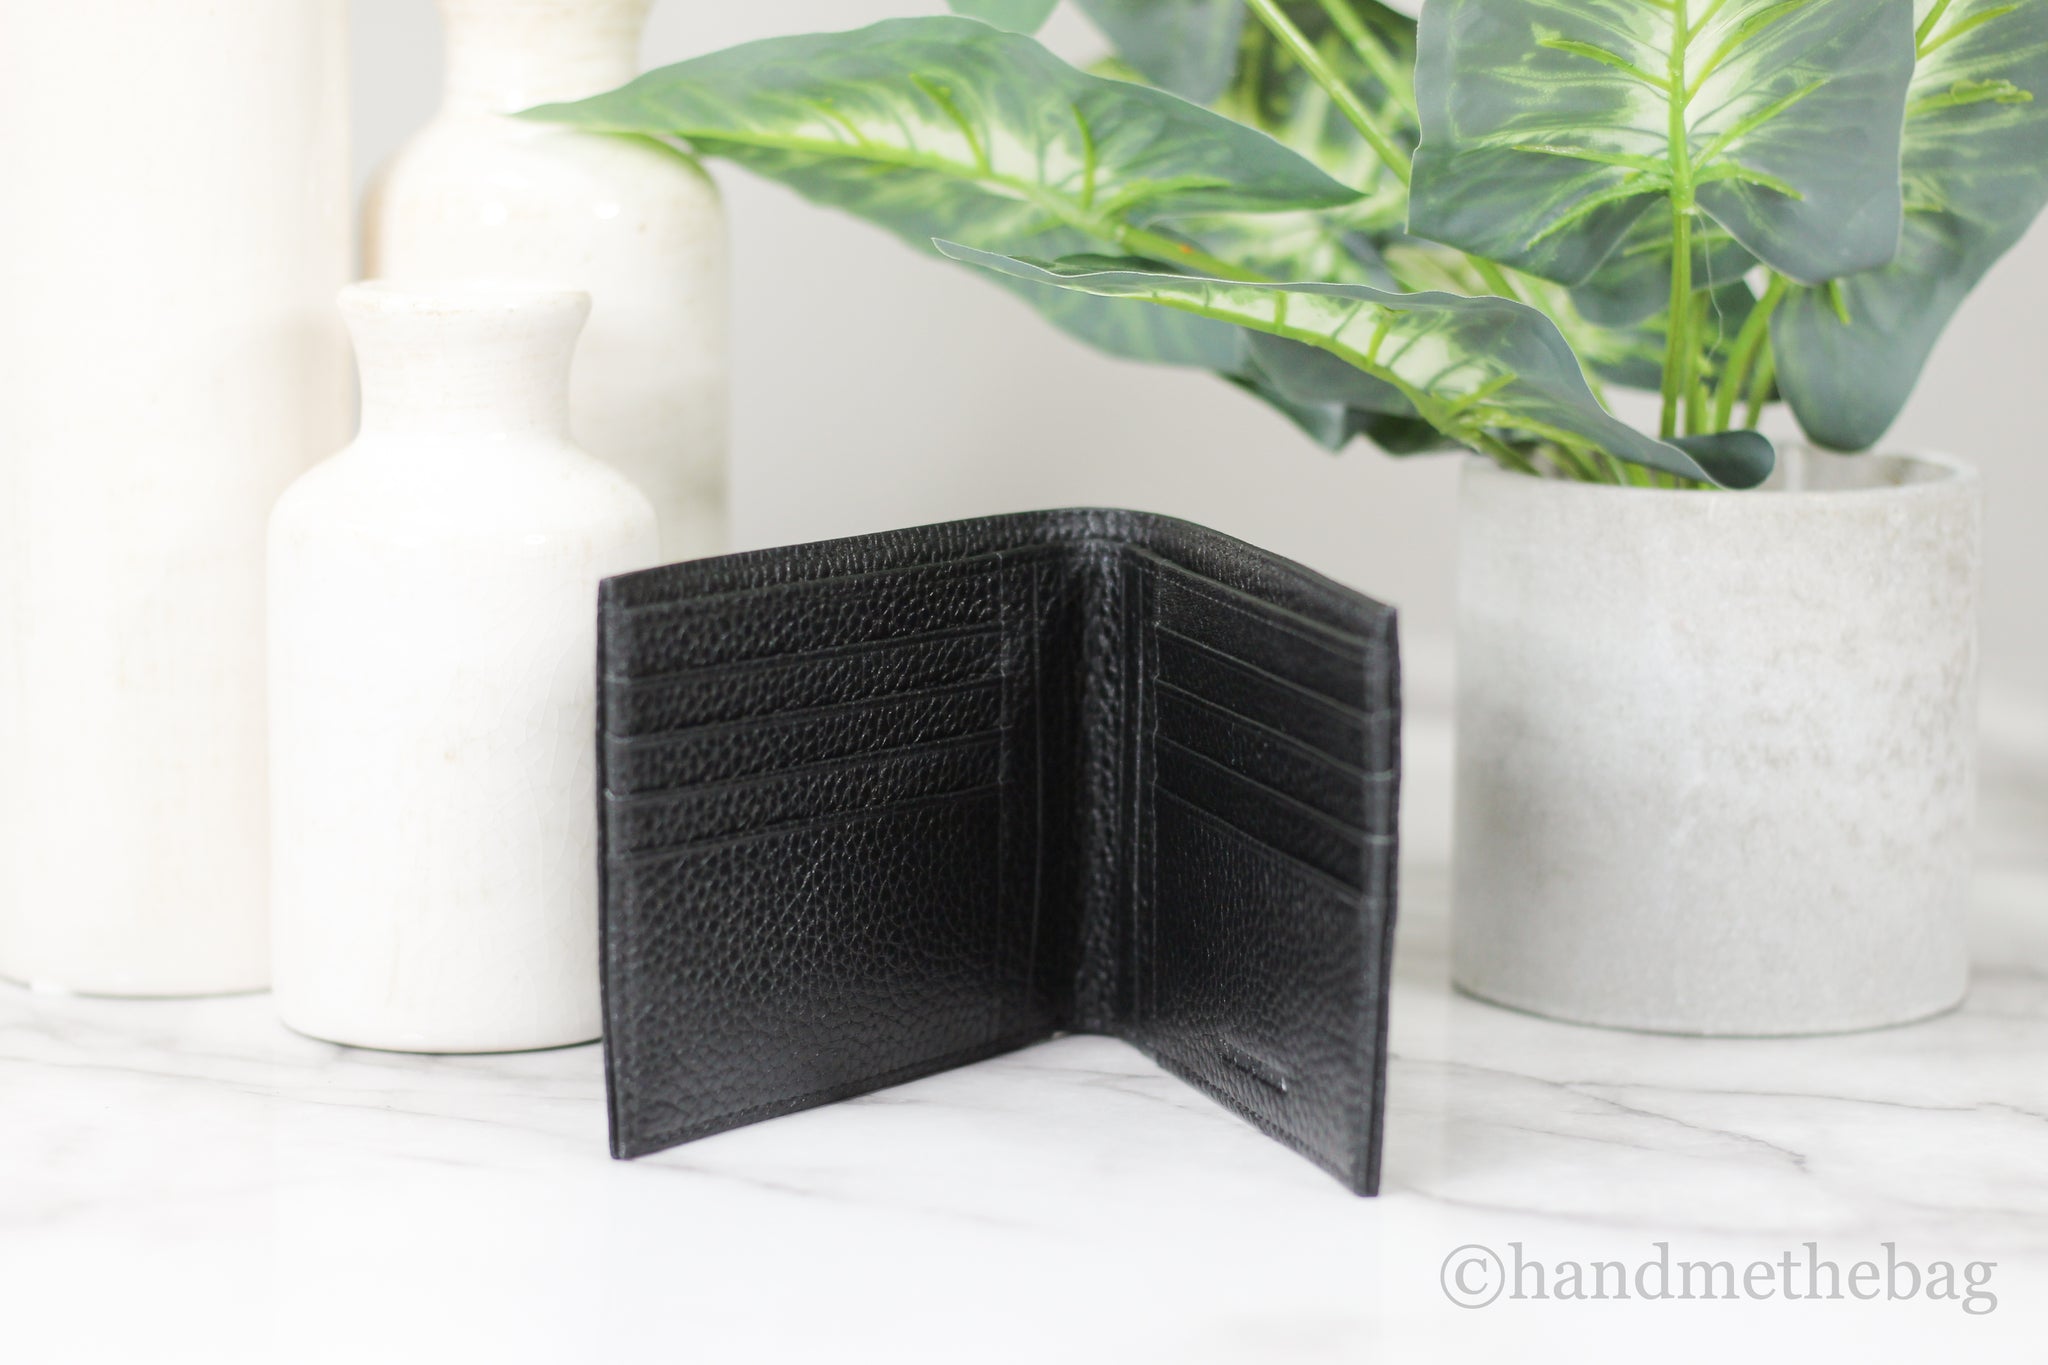 Emporio Armani Black Grainy Pebbled Leather Bi-Fold Organizer Wallet